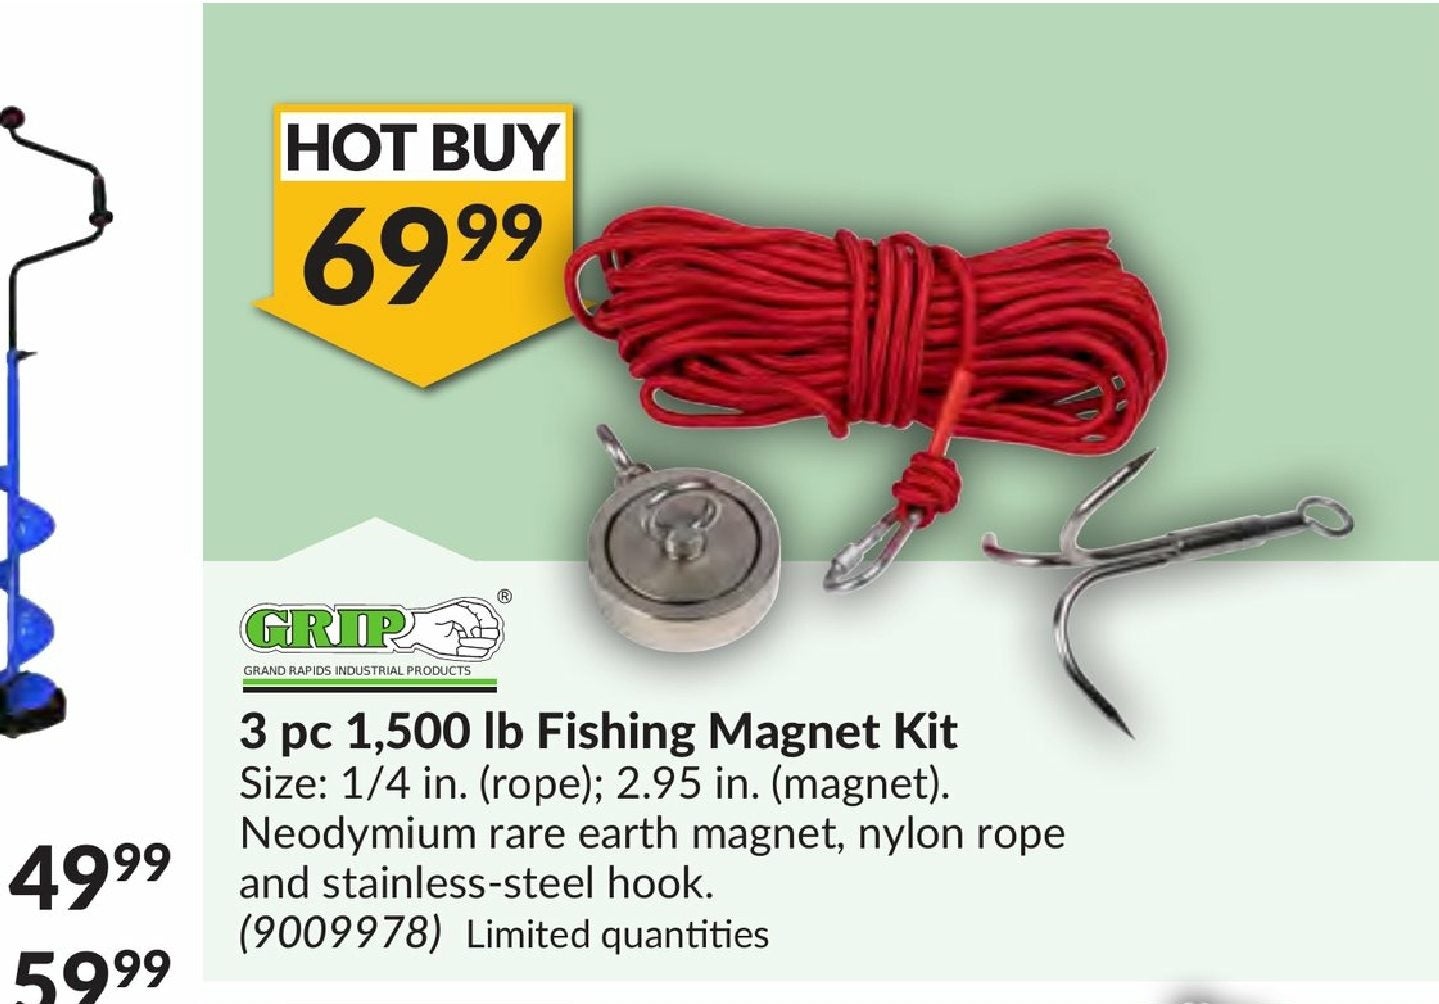 Princess Auto] Magnet Fishing Kit 1500lbs - $69.99 - RedFlagDeals